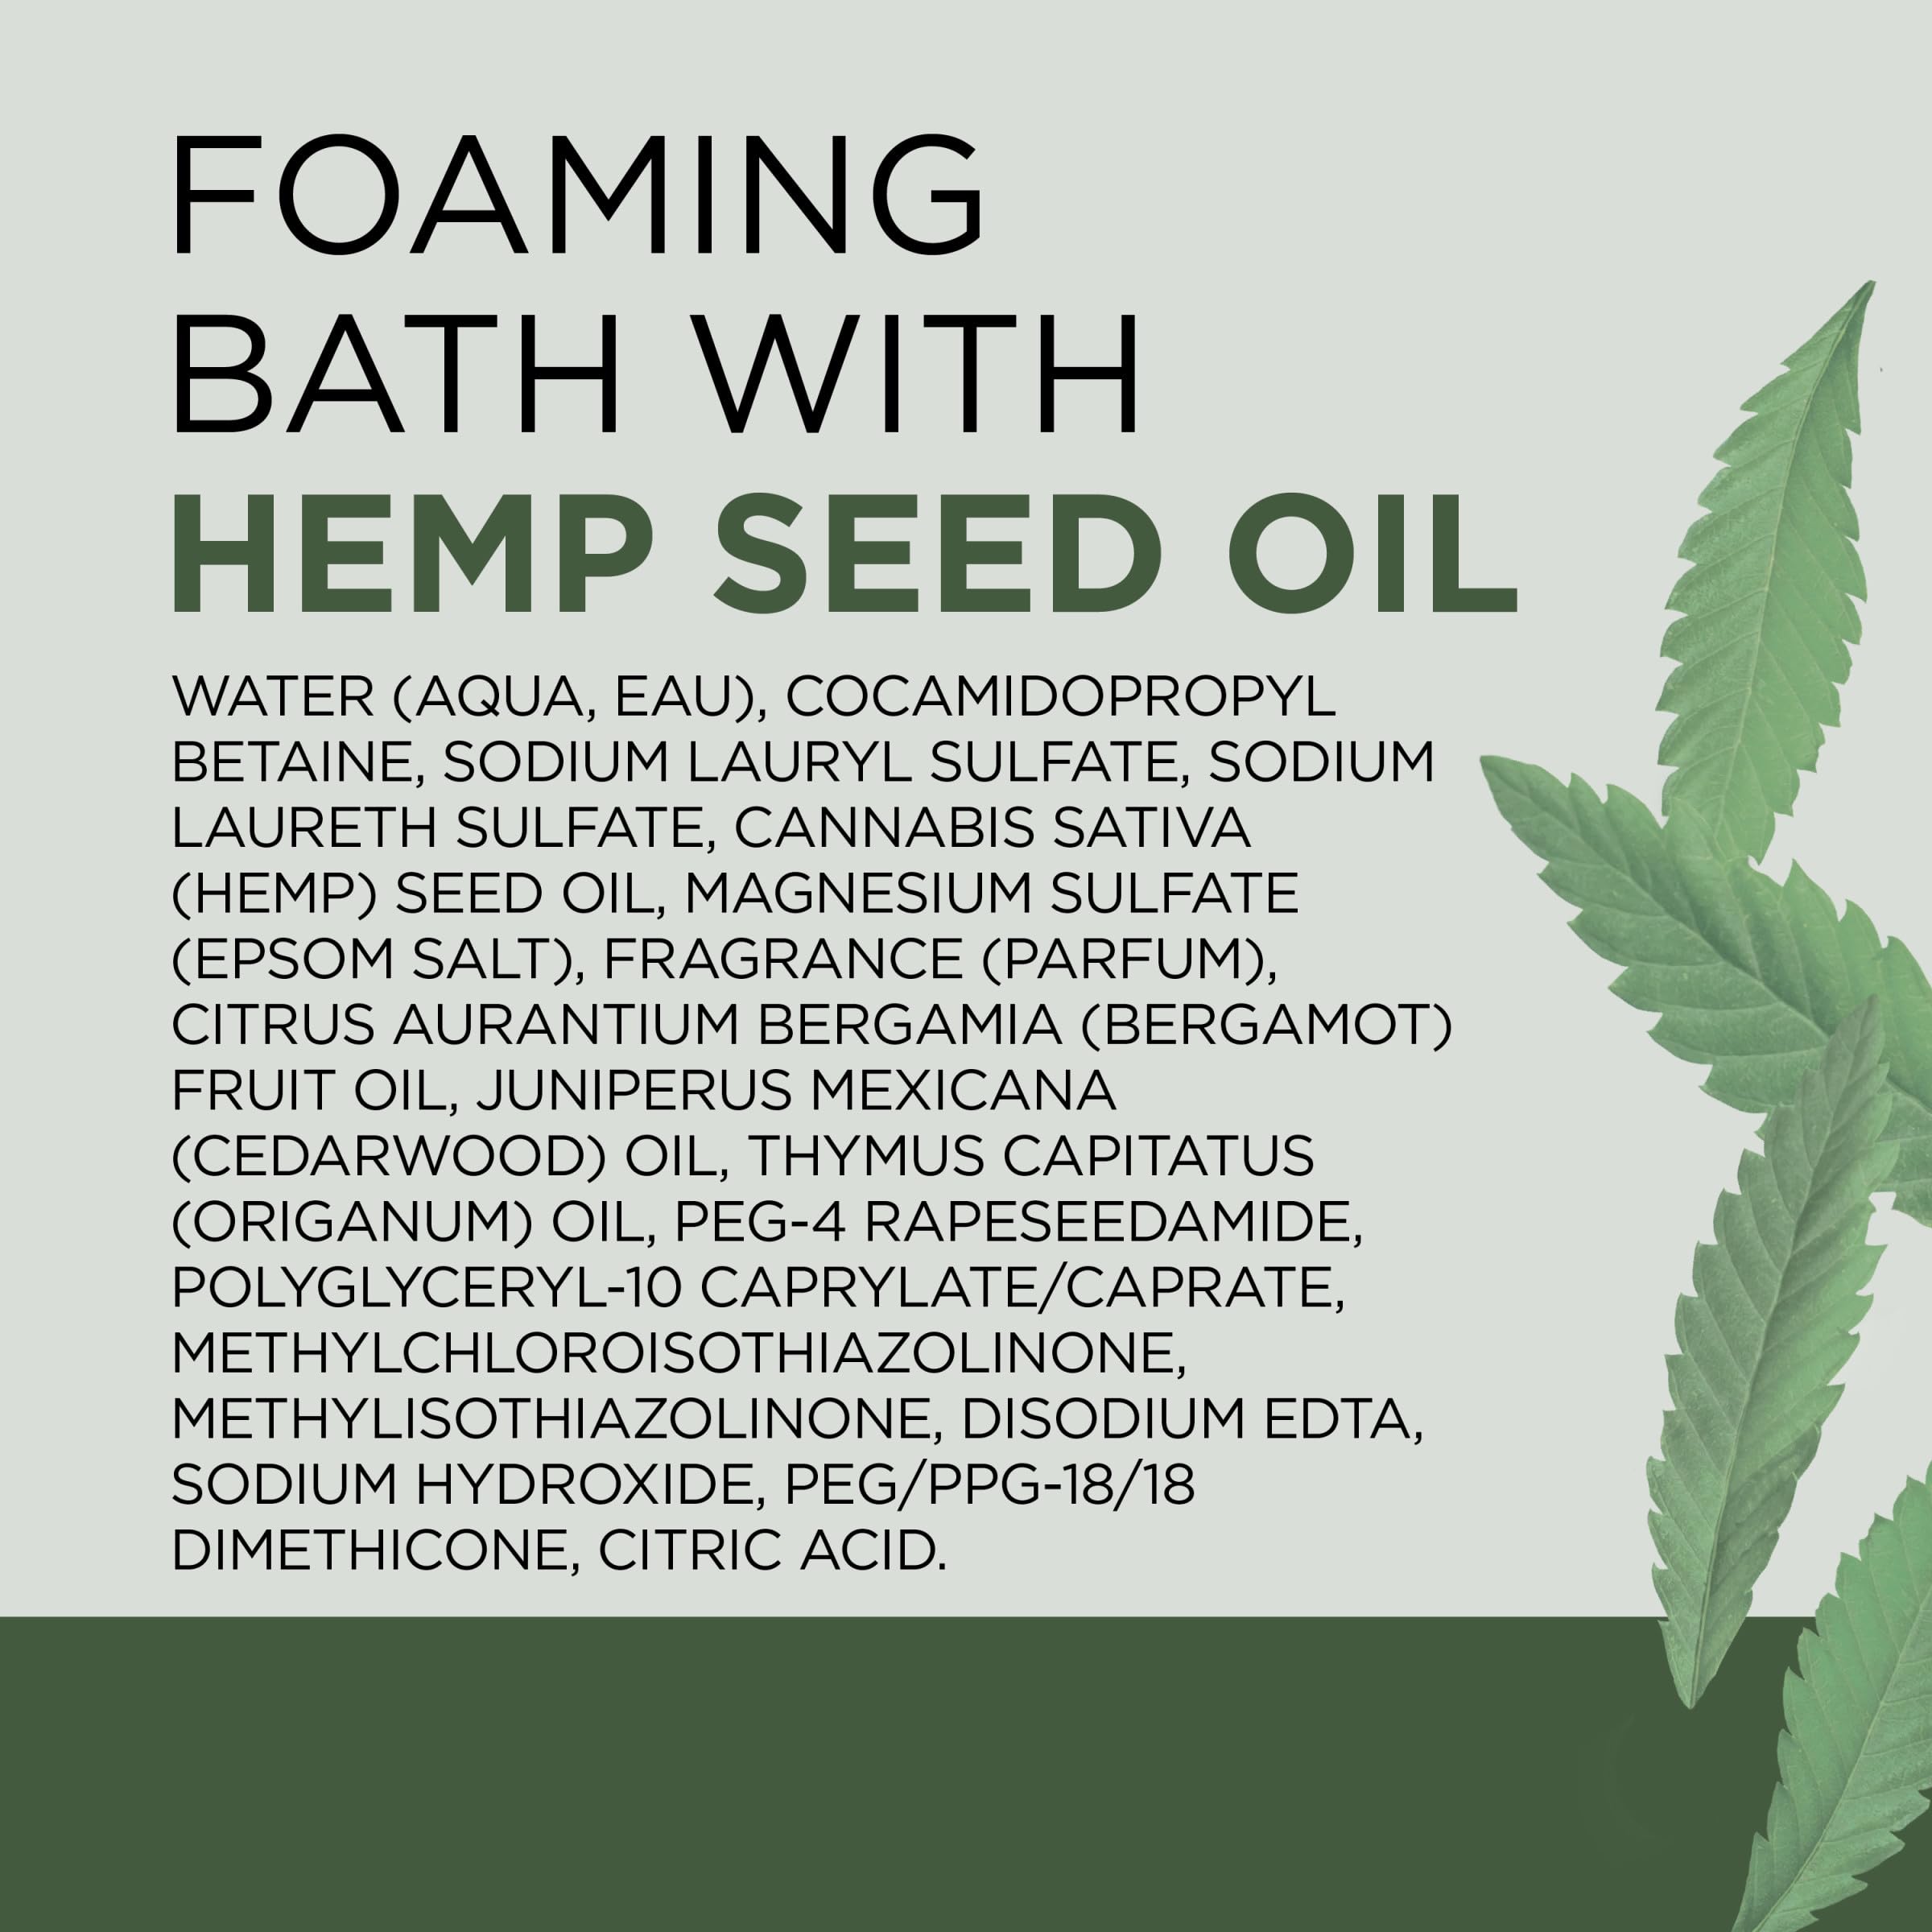 Dr Teal's Foaming Bath with Pure Epsom Salt, Cannabis Sativa Hemp Seed Oil, 34 fl oz (Pack of 2)